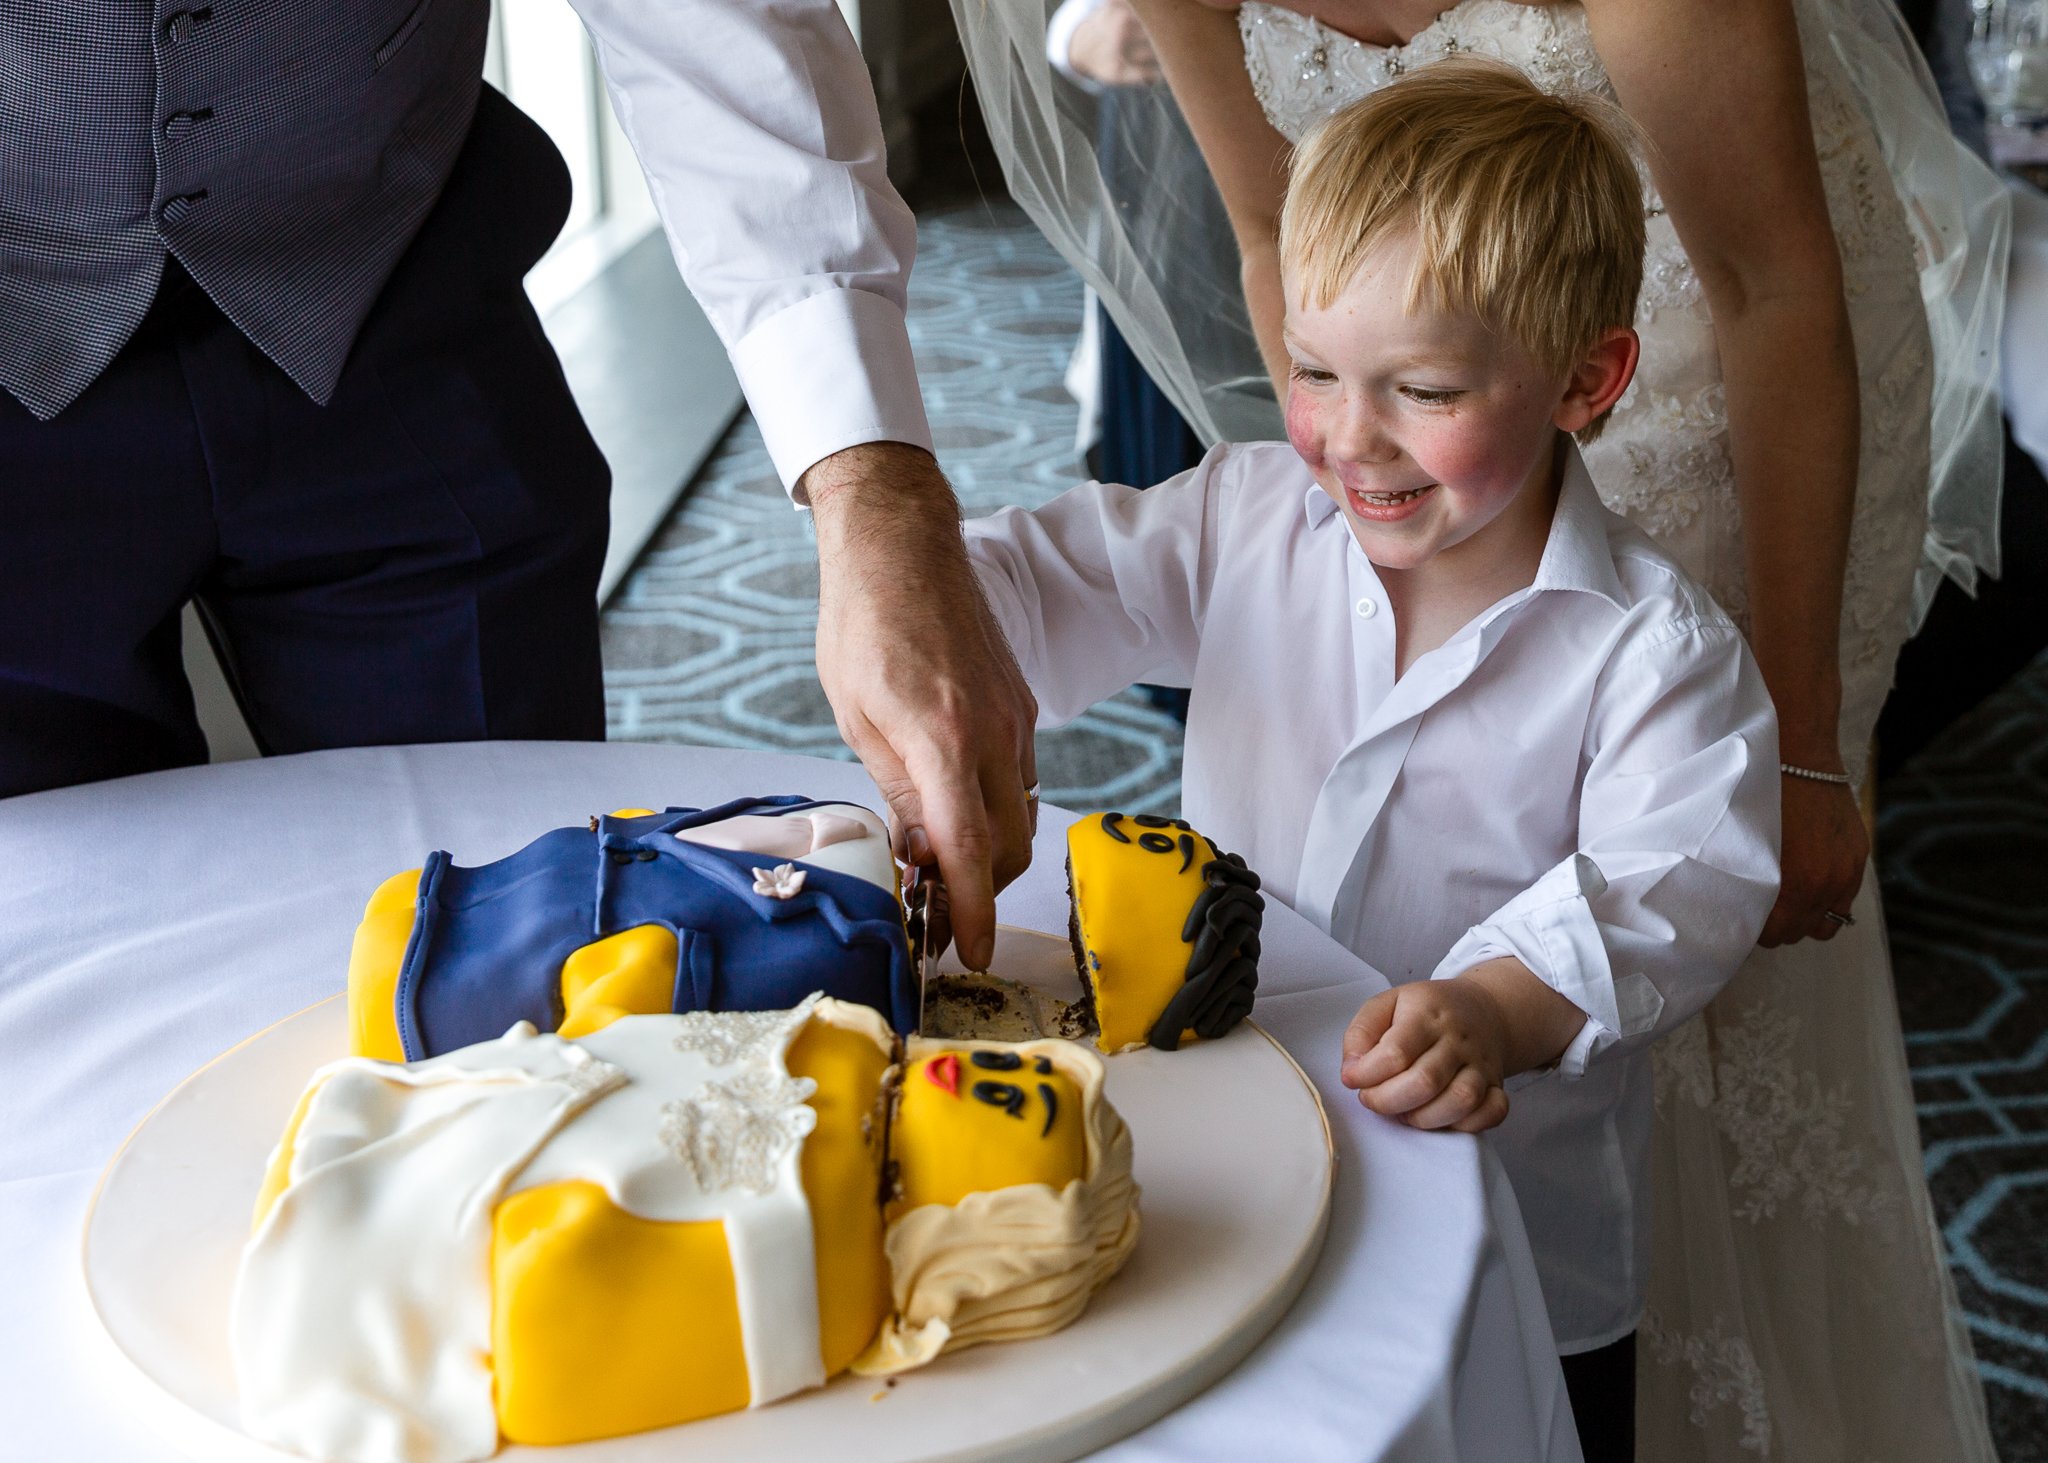 lego cake cutting at wedding st davids hotel cardiff bay